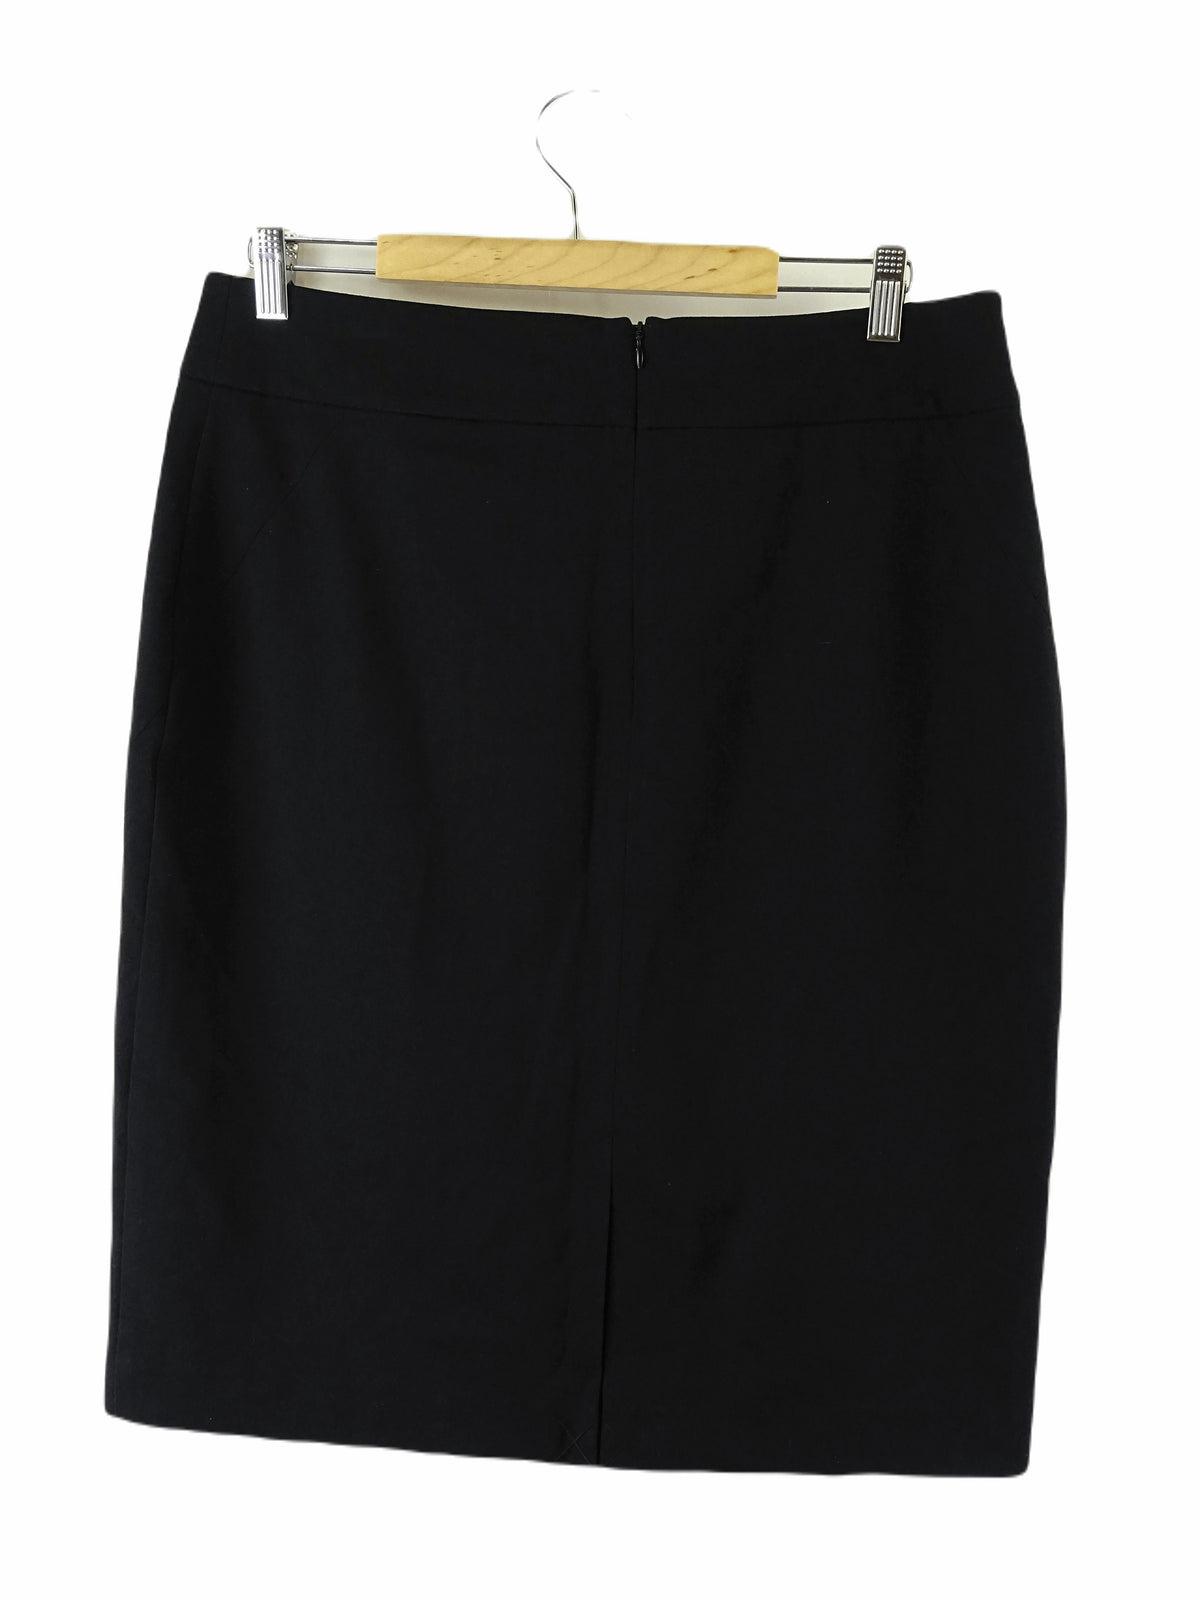 Veronika Main Black Pencil Skirt 14